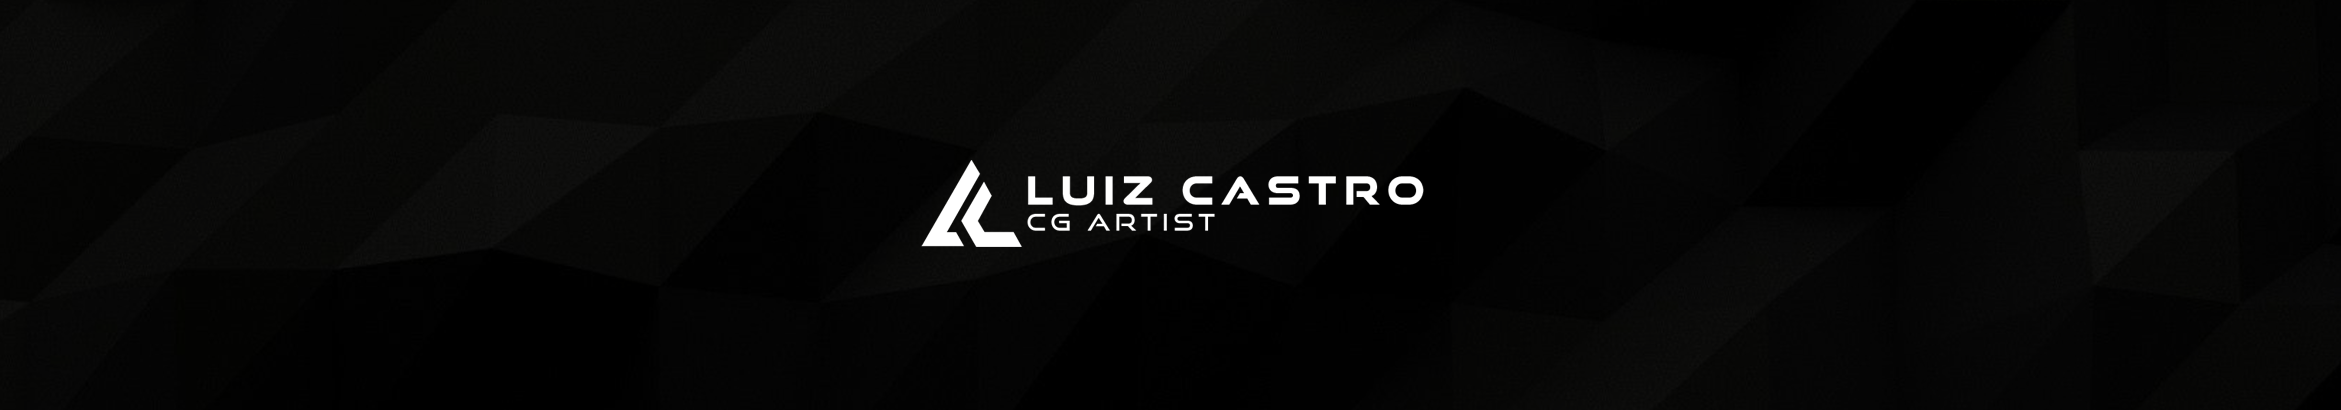 Luiz Castro's profile banner